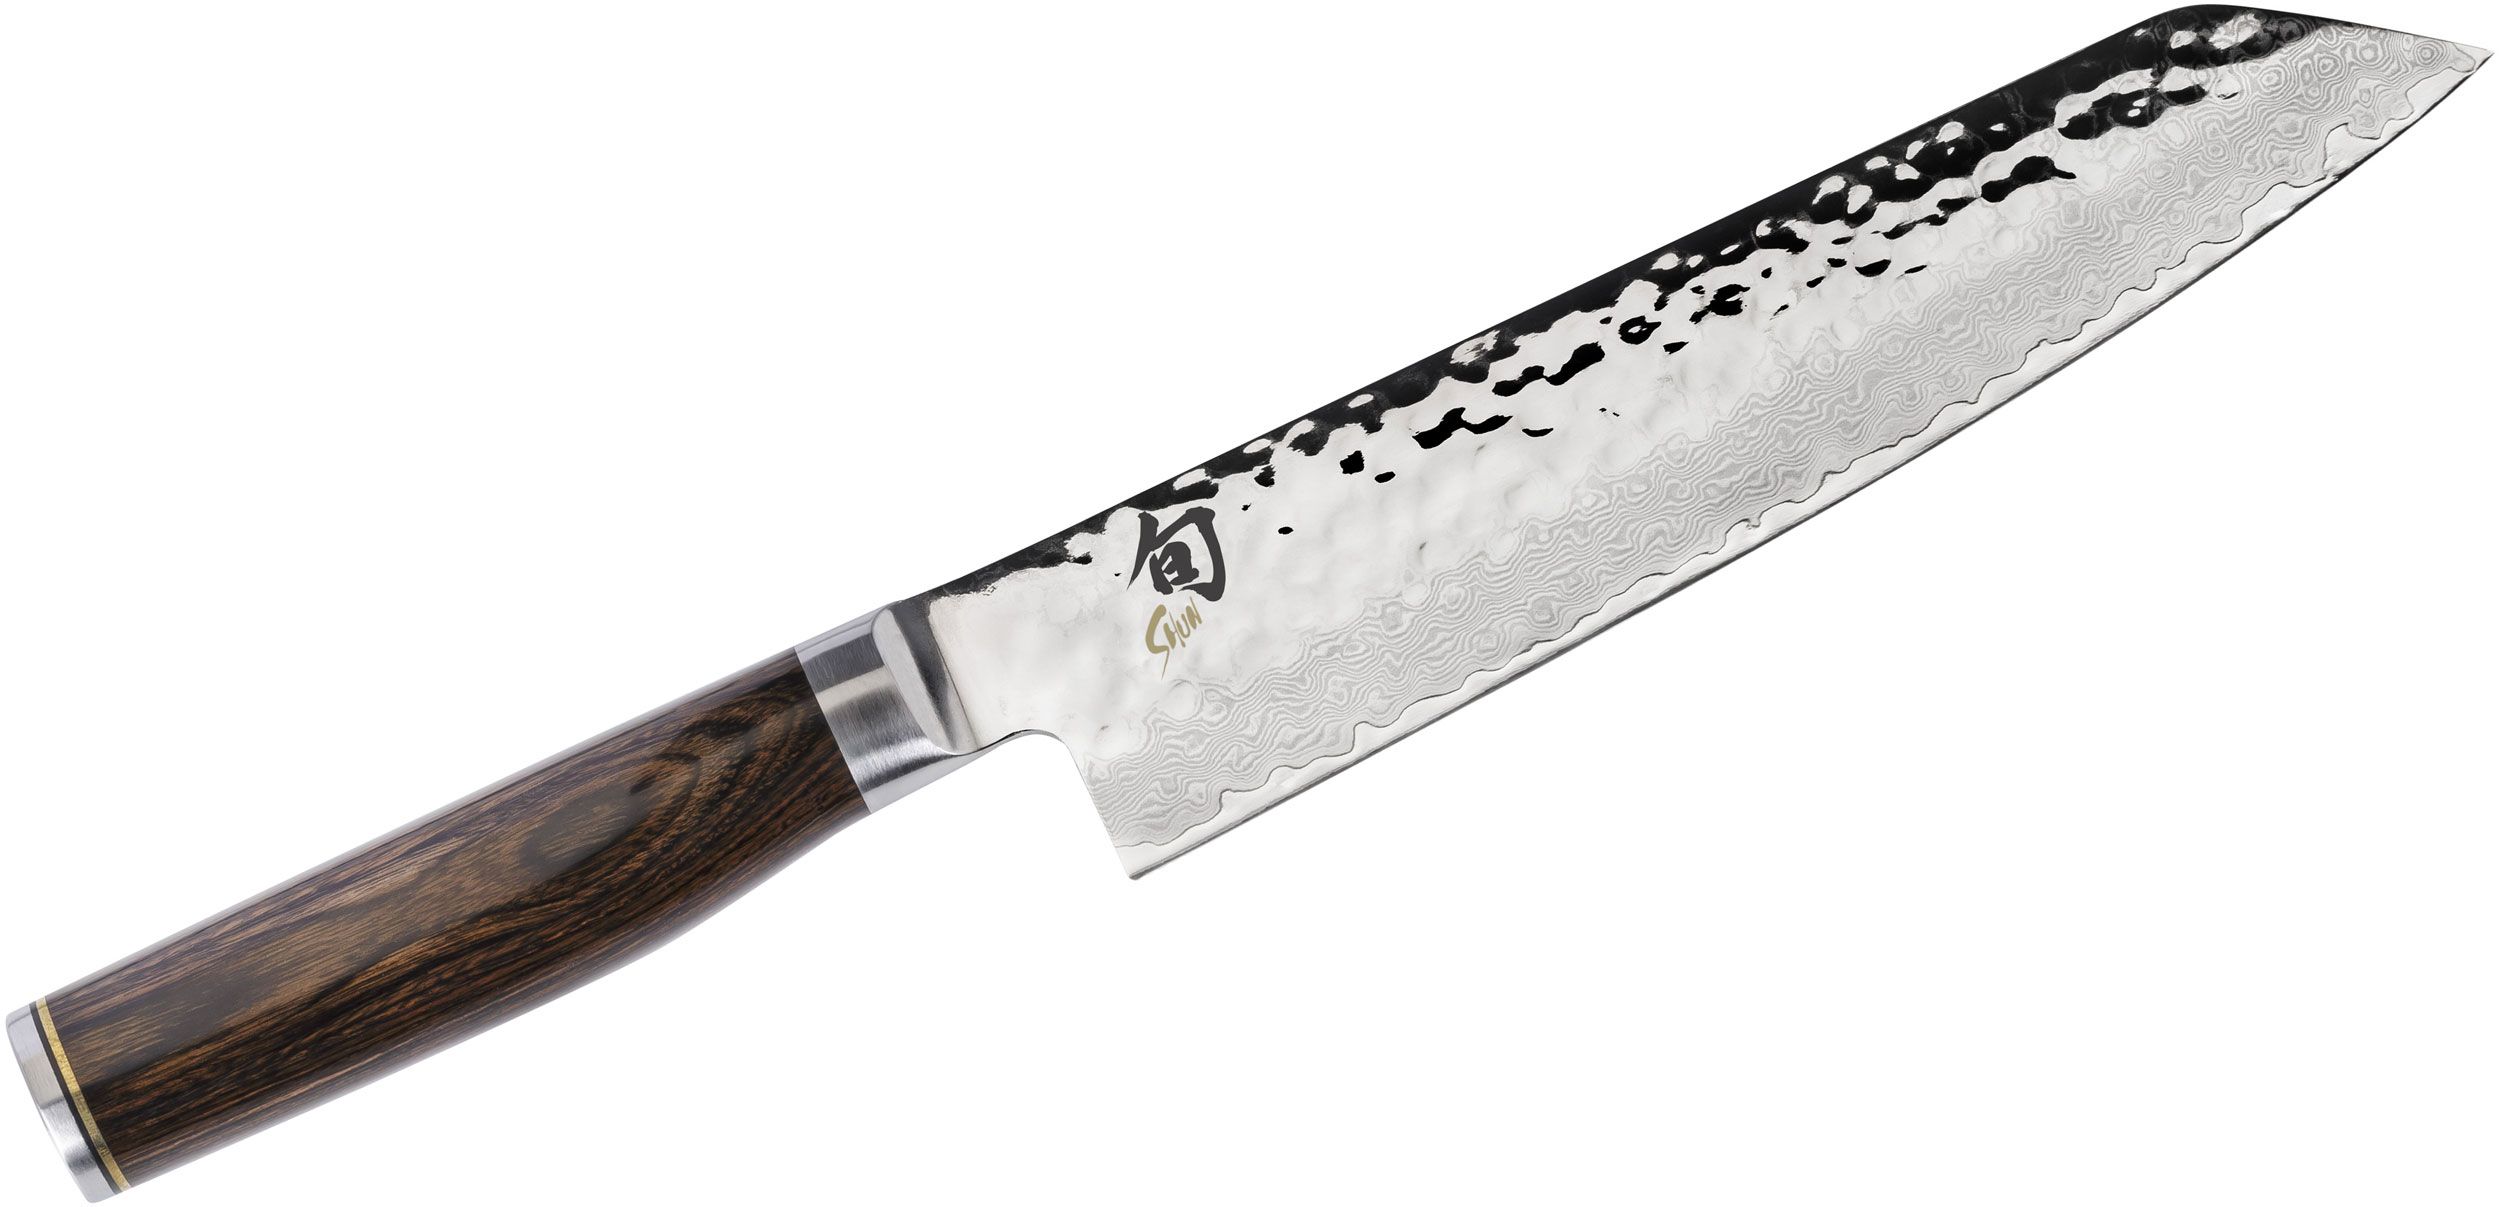 Shun Premier 8 Chef's Knife + Reviews